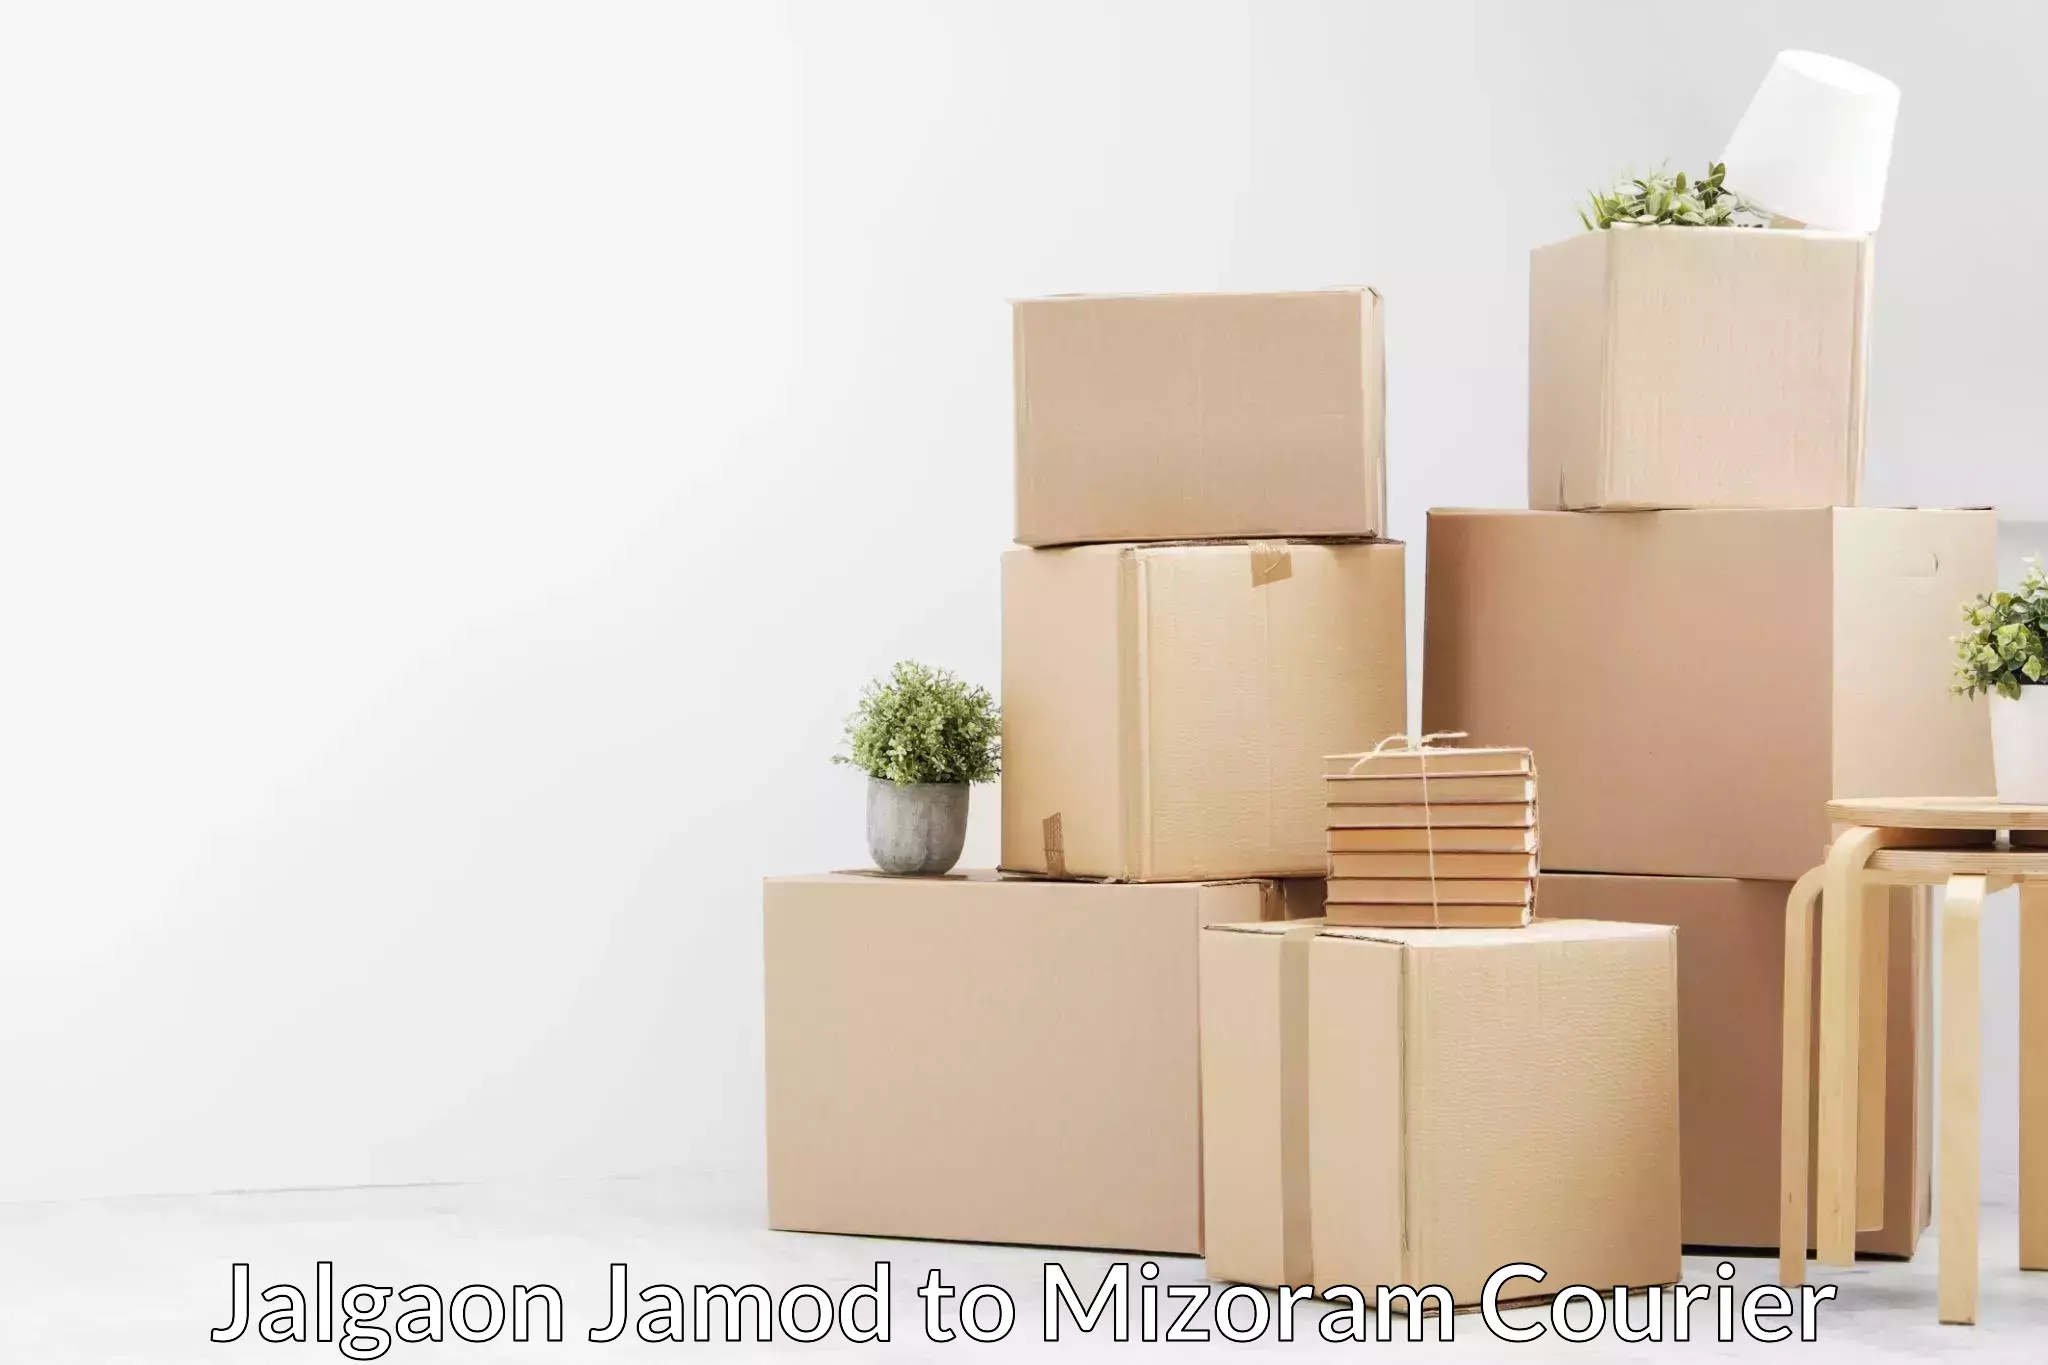 Personalized moving plans Jalgaon Jamod to Mizoram